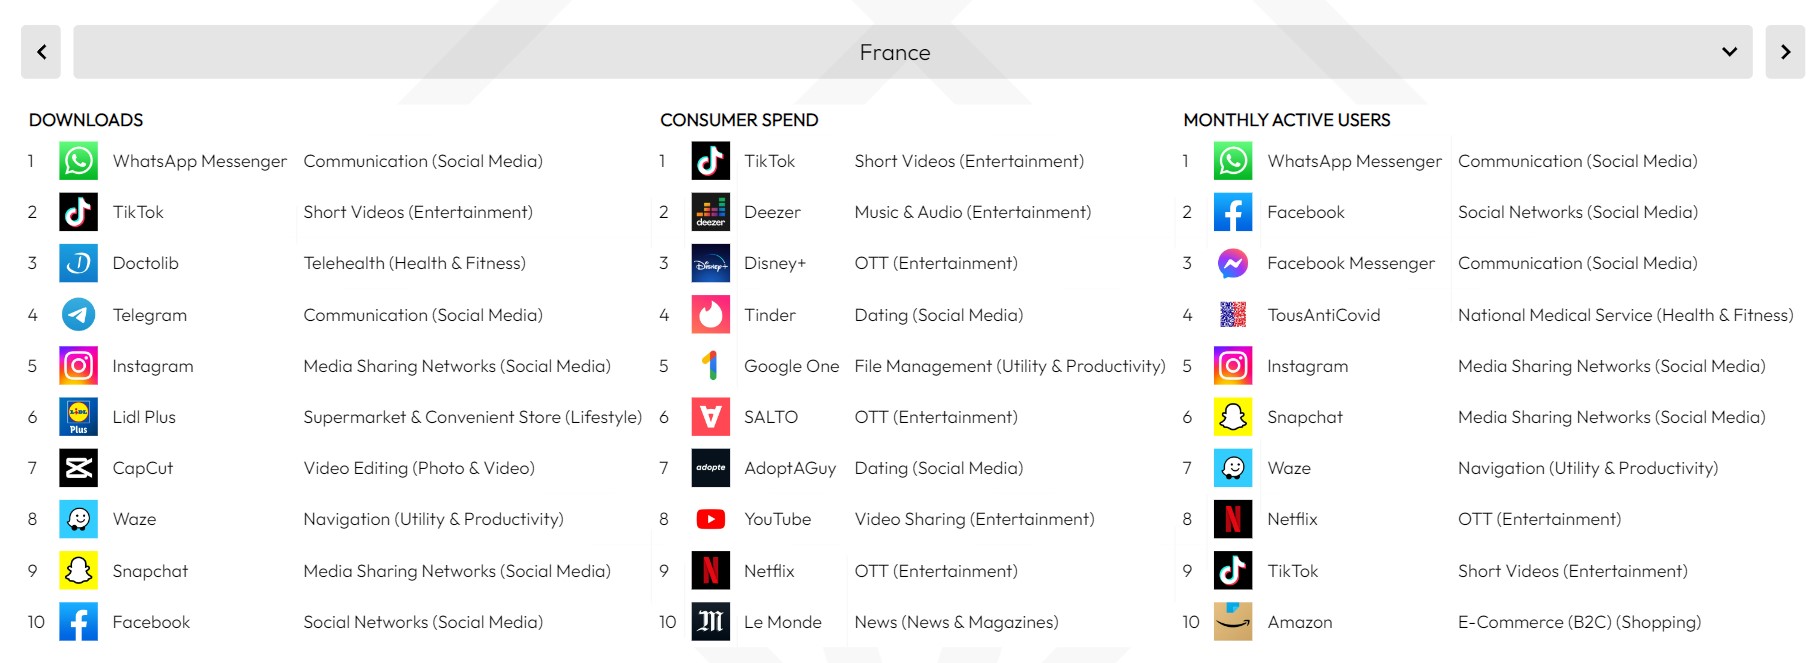 mobile apps ranking france-2022